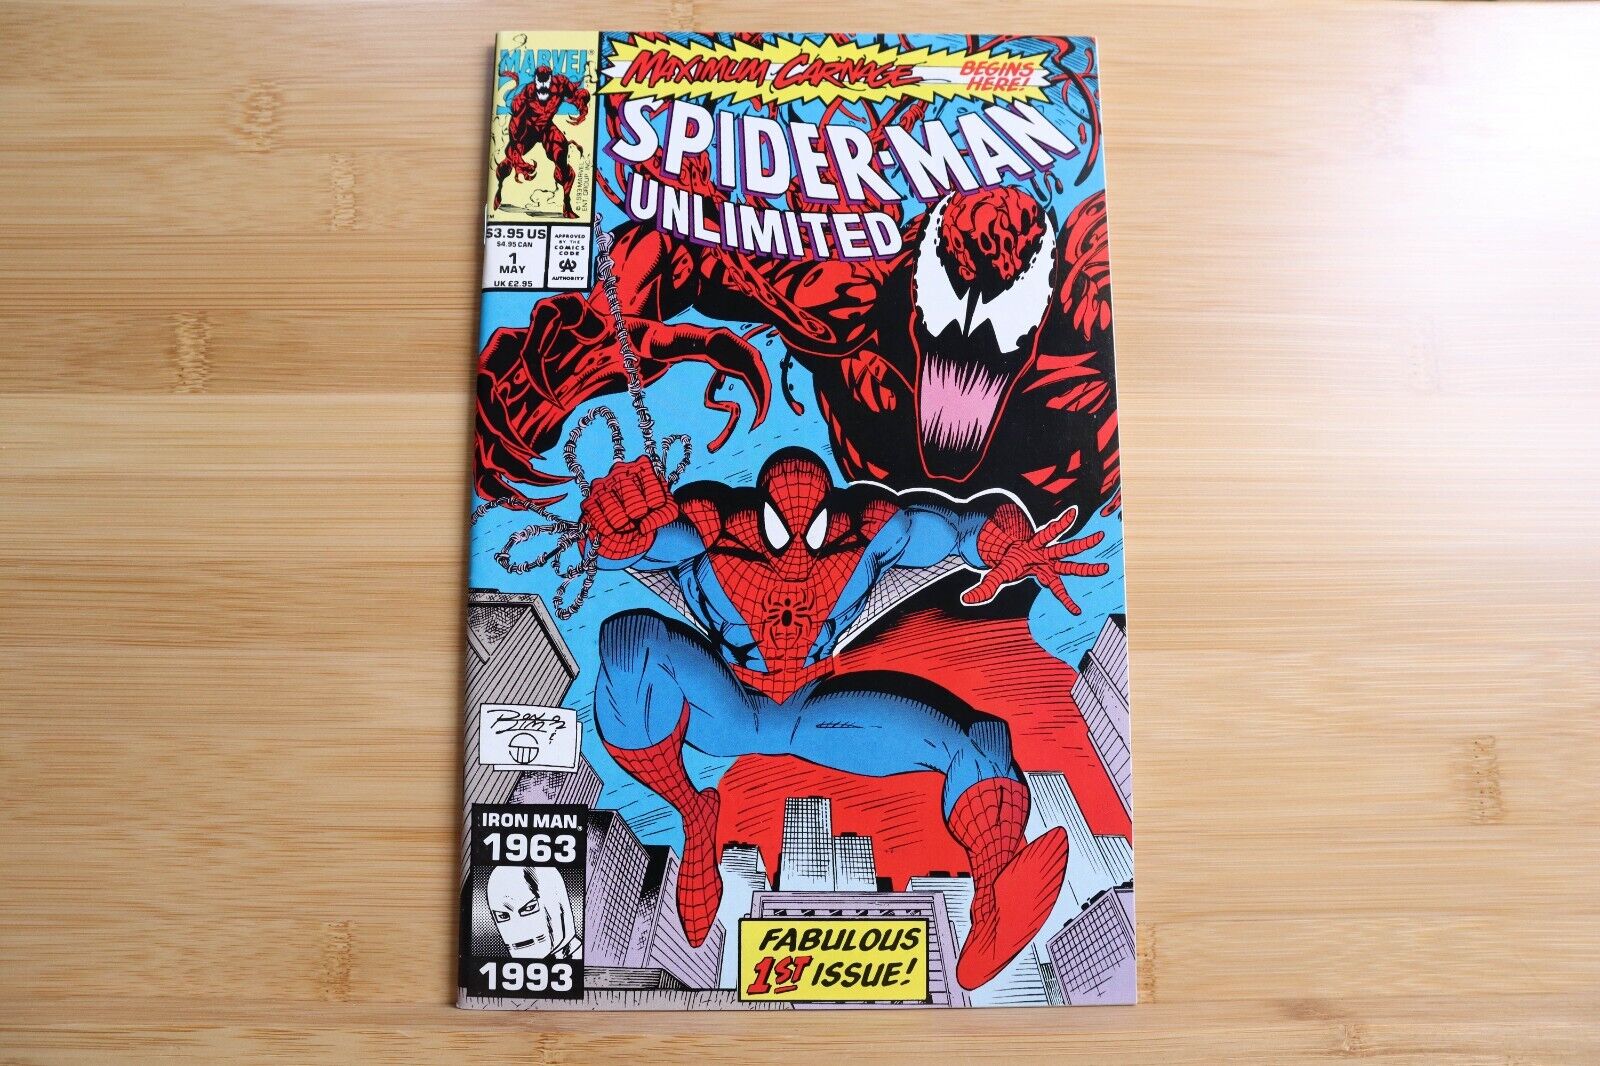 Spder-Man Unlimited #1 Maximum Carnage Marvel Comics VF/NM - 1993